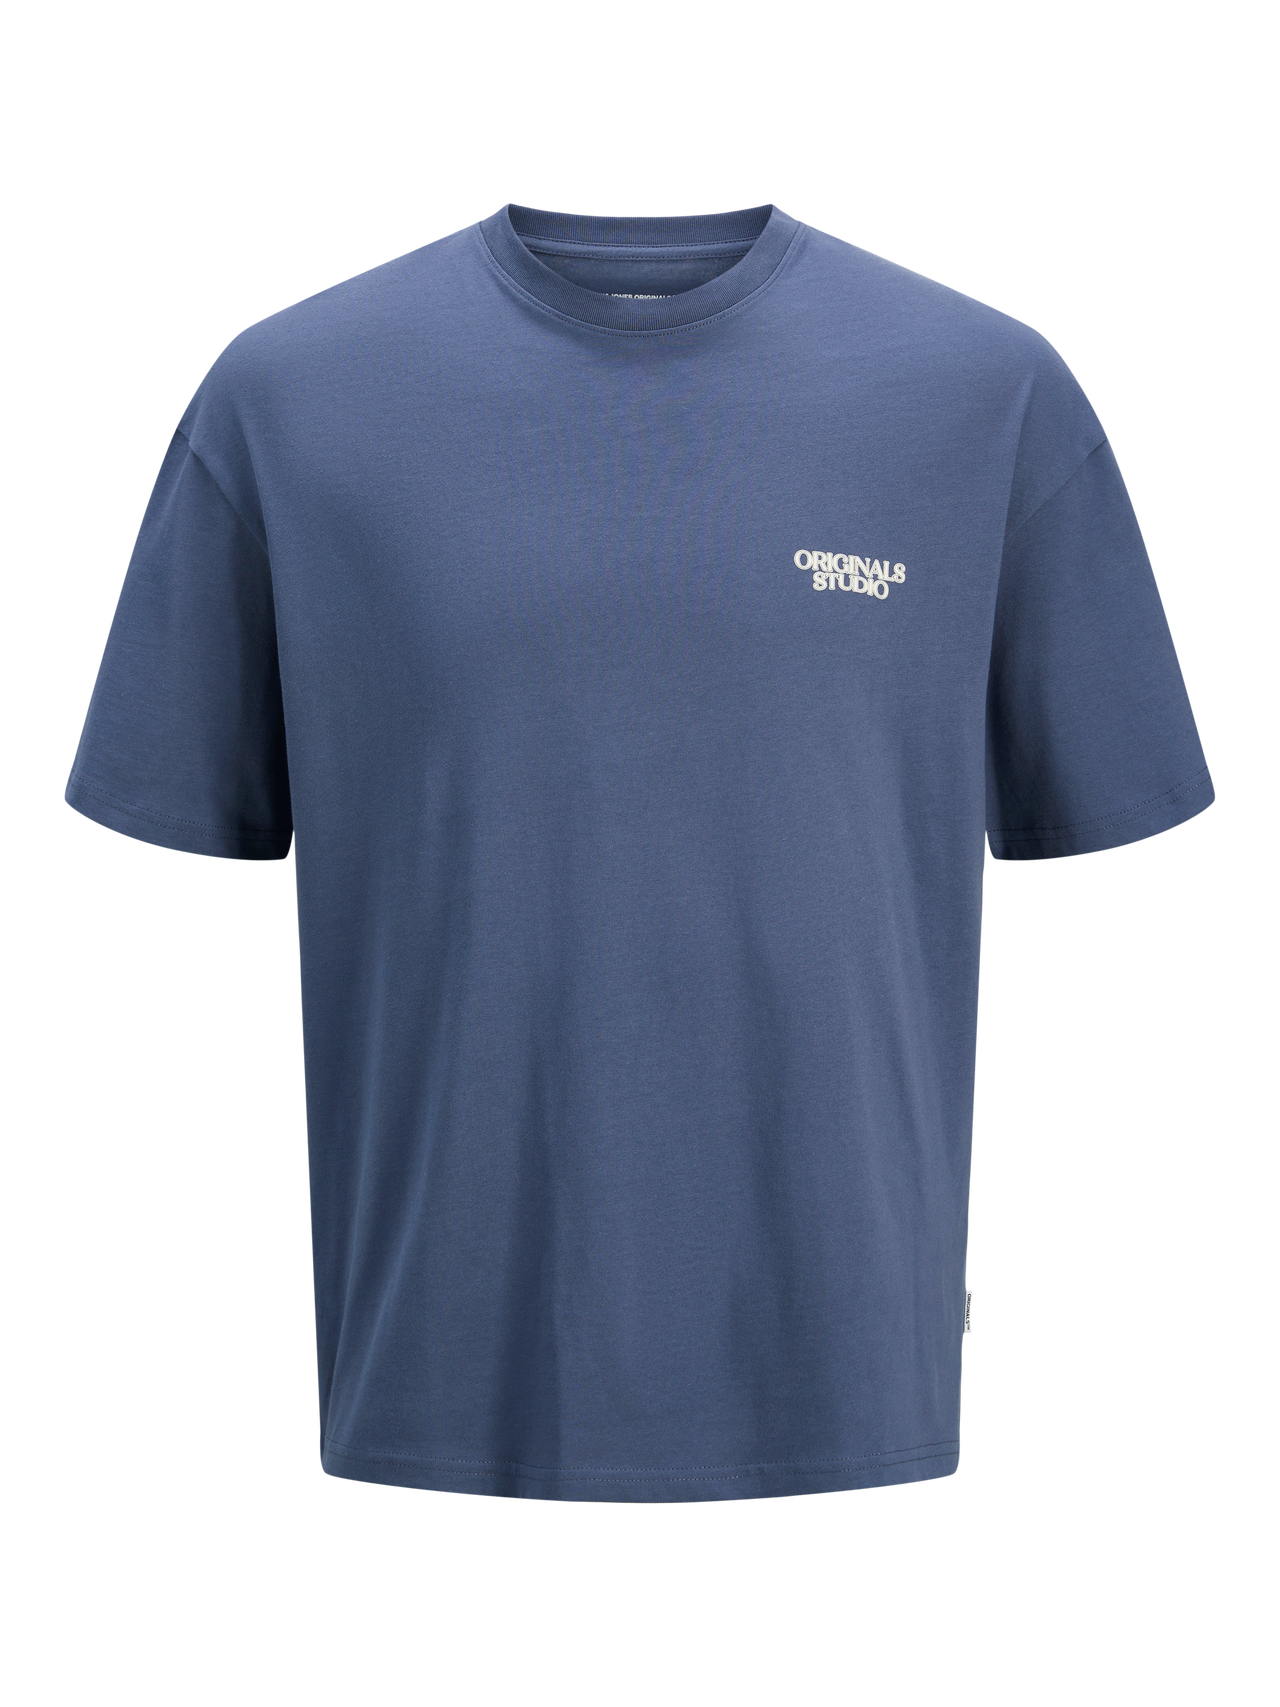 Jack & Jones T-shirt Stampato Girocollo -Nightshadow Blue - 12262501